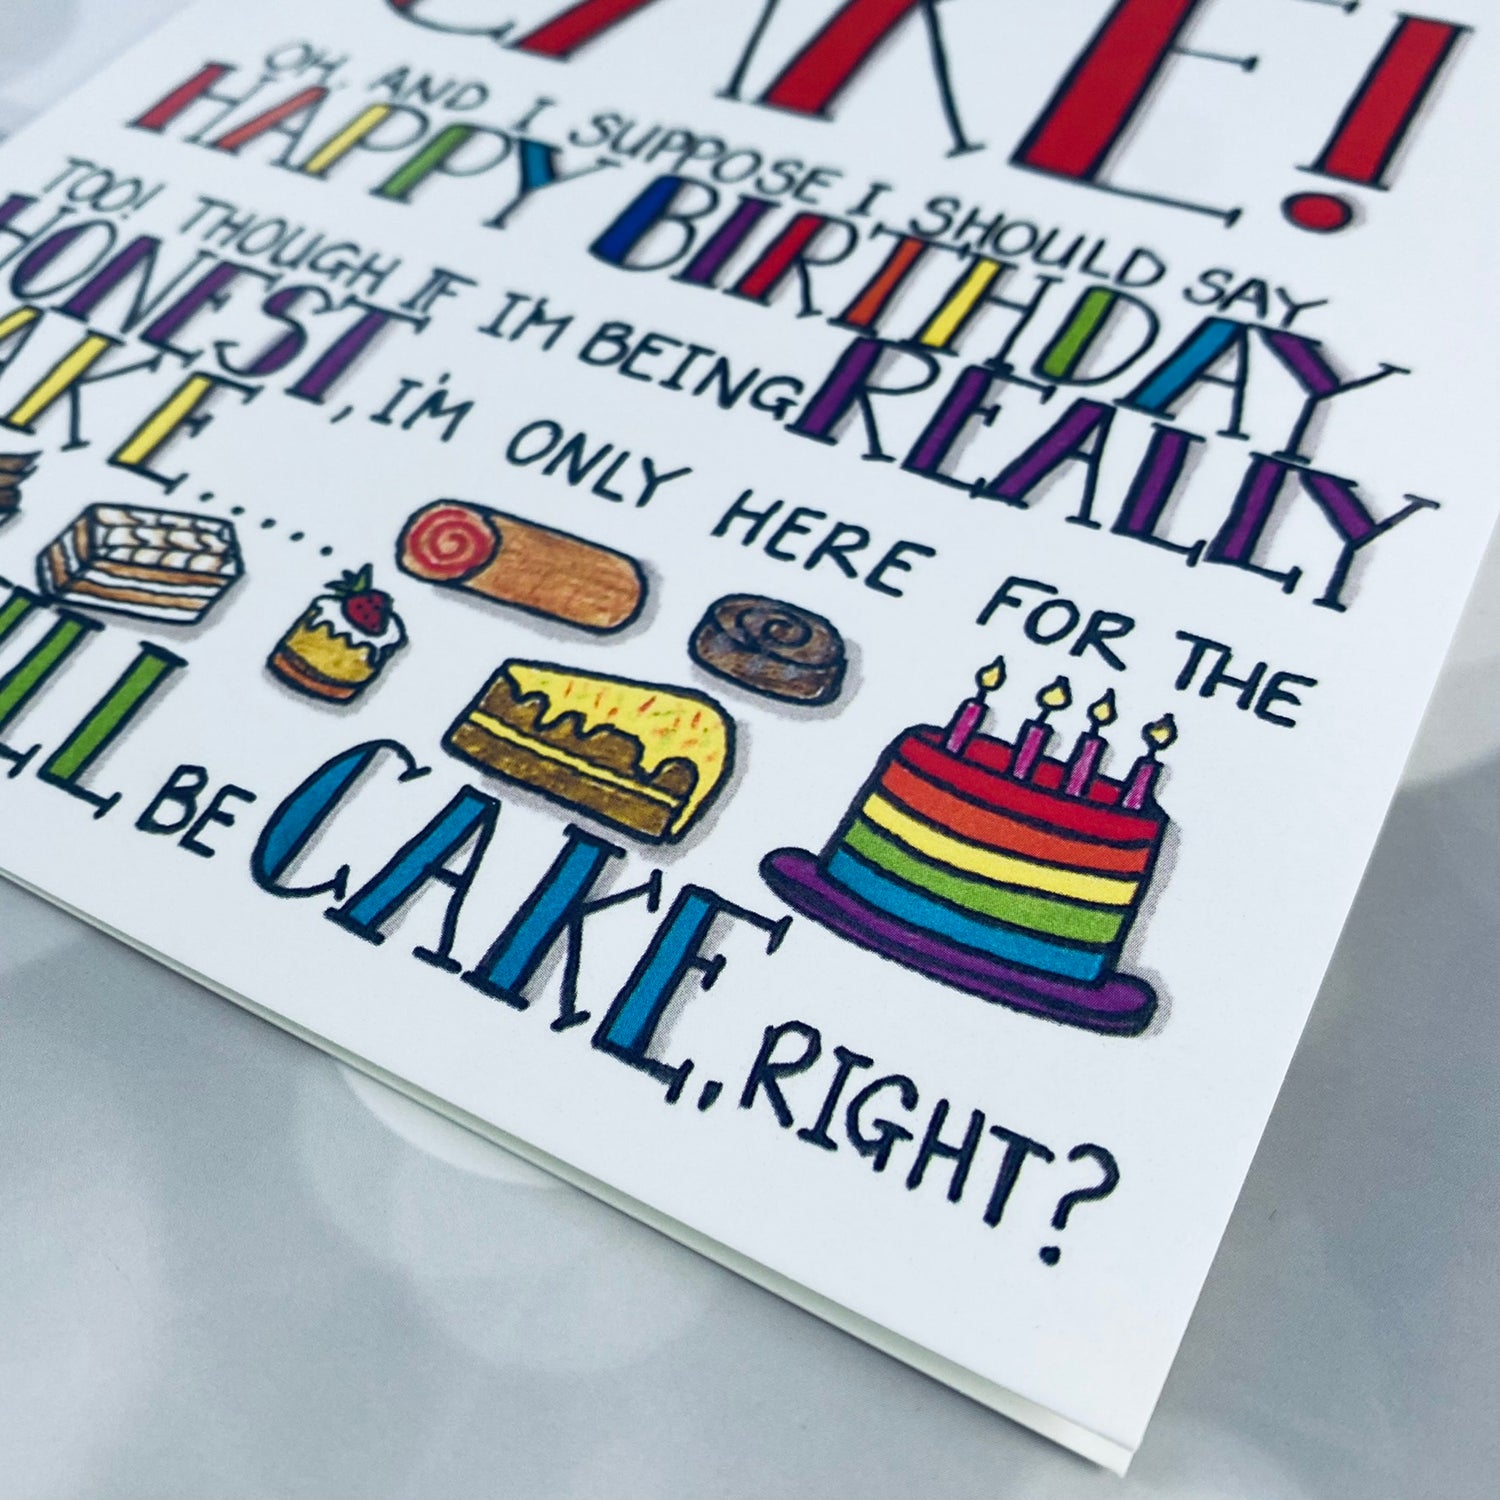 unusual-birthday-cards